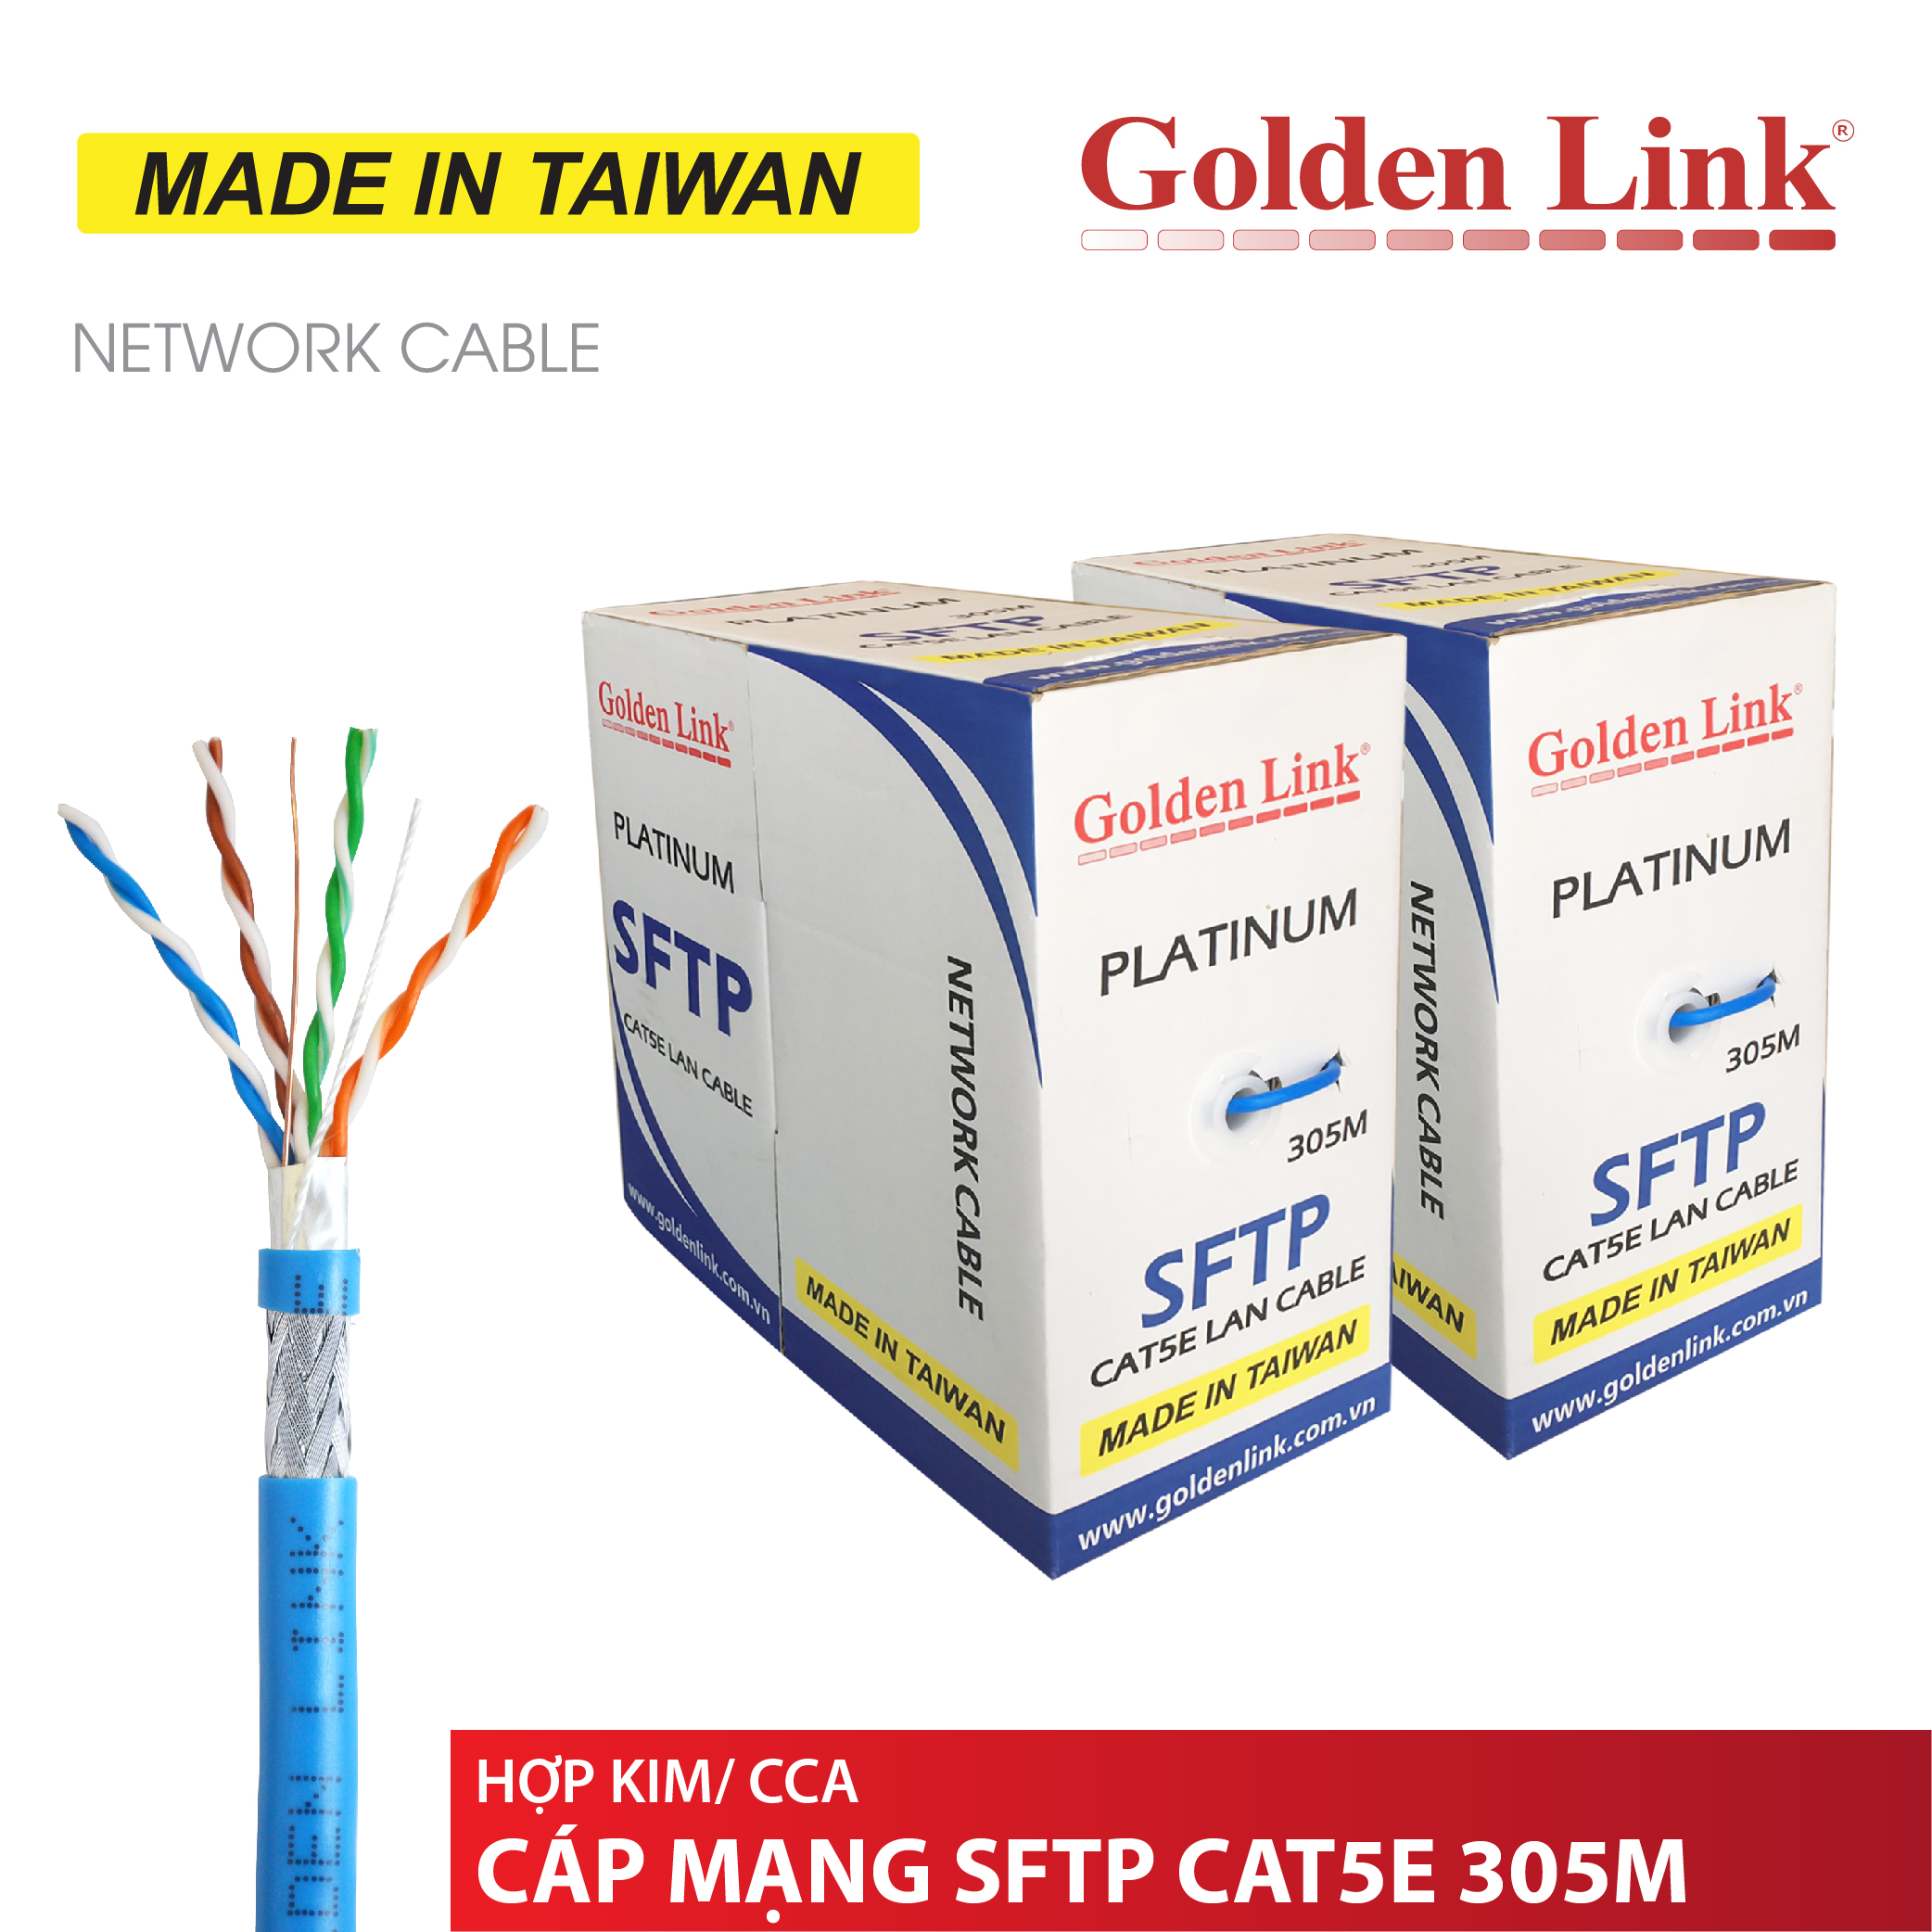 CÁP MẠNG Golden Link PLATINUM SFTP CAT5E MADE IN TAIWAN